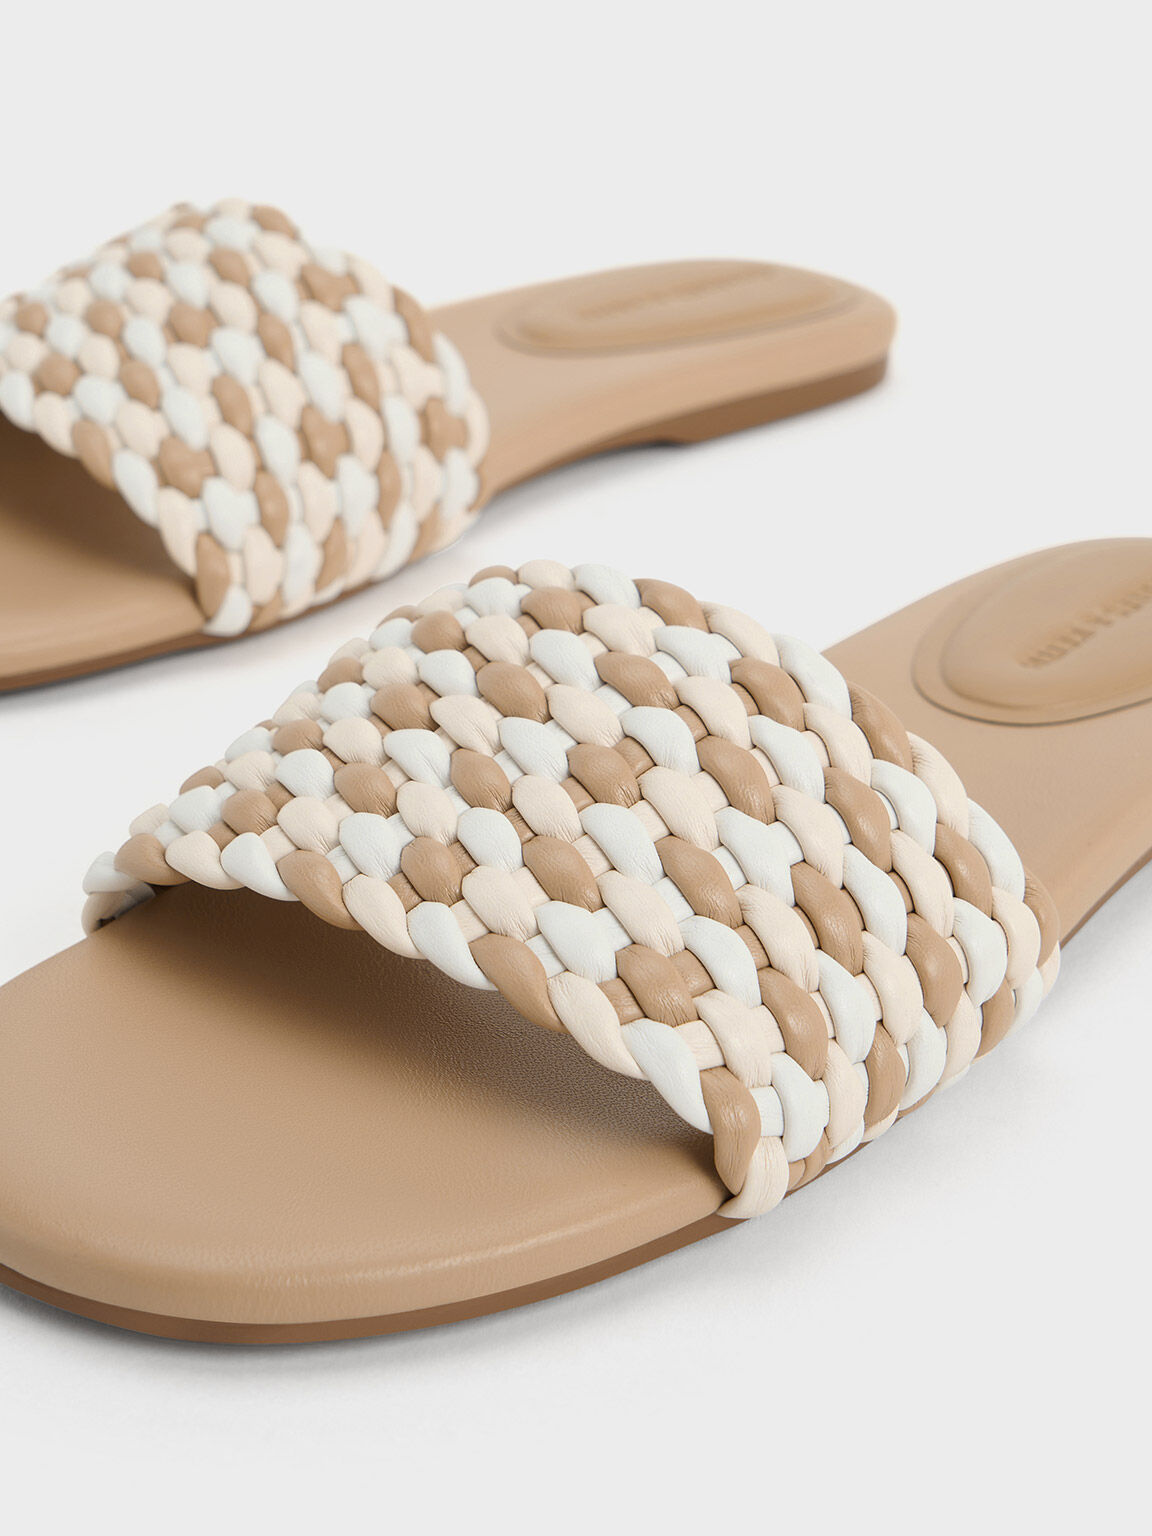 Sandal Slides Open-Toe Woven, Multi, hi-res